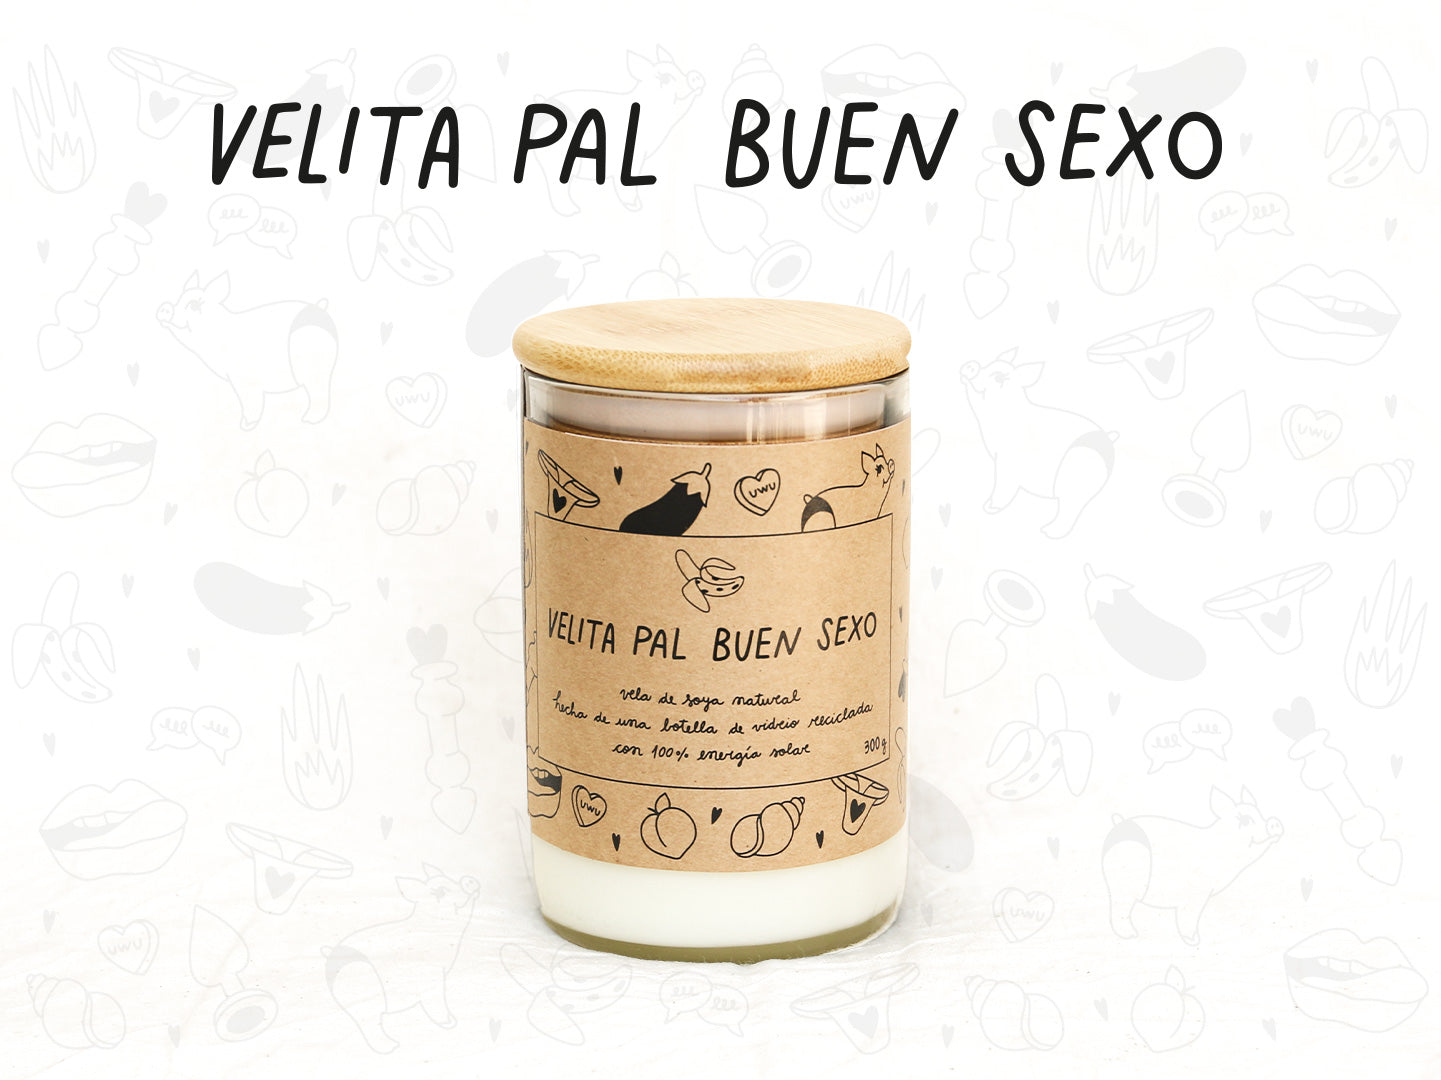 Velita Pal Buen Sexo - Aroma Vainilla - Transparente